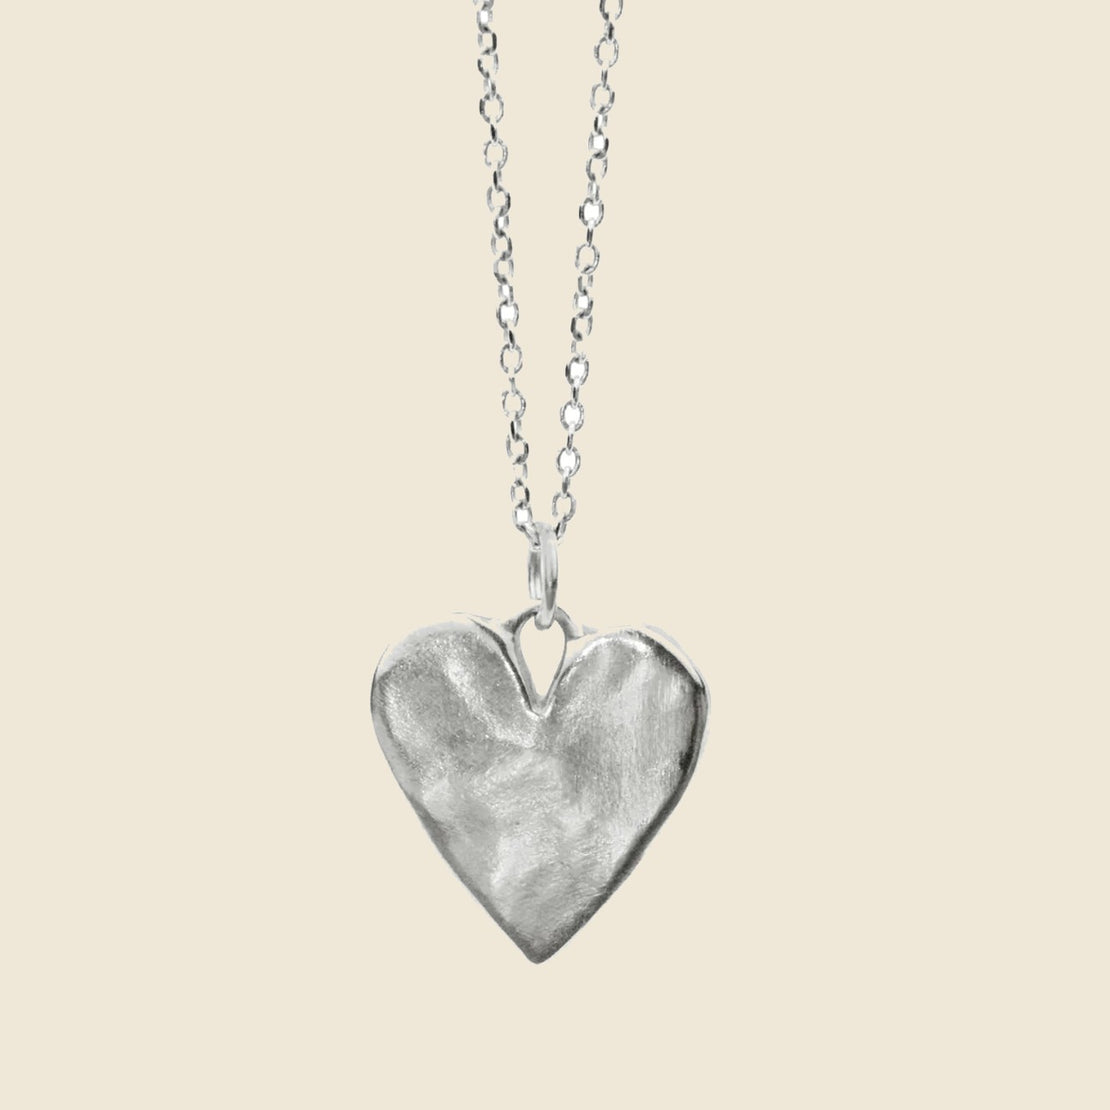 Amanda Hunt Sweet Heart Necklace - Silver